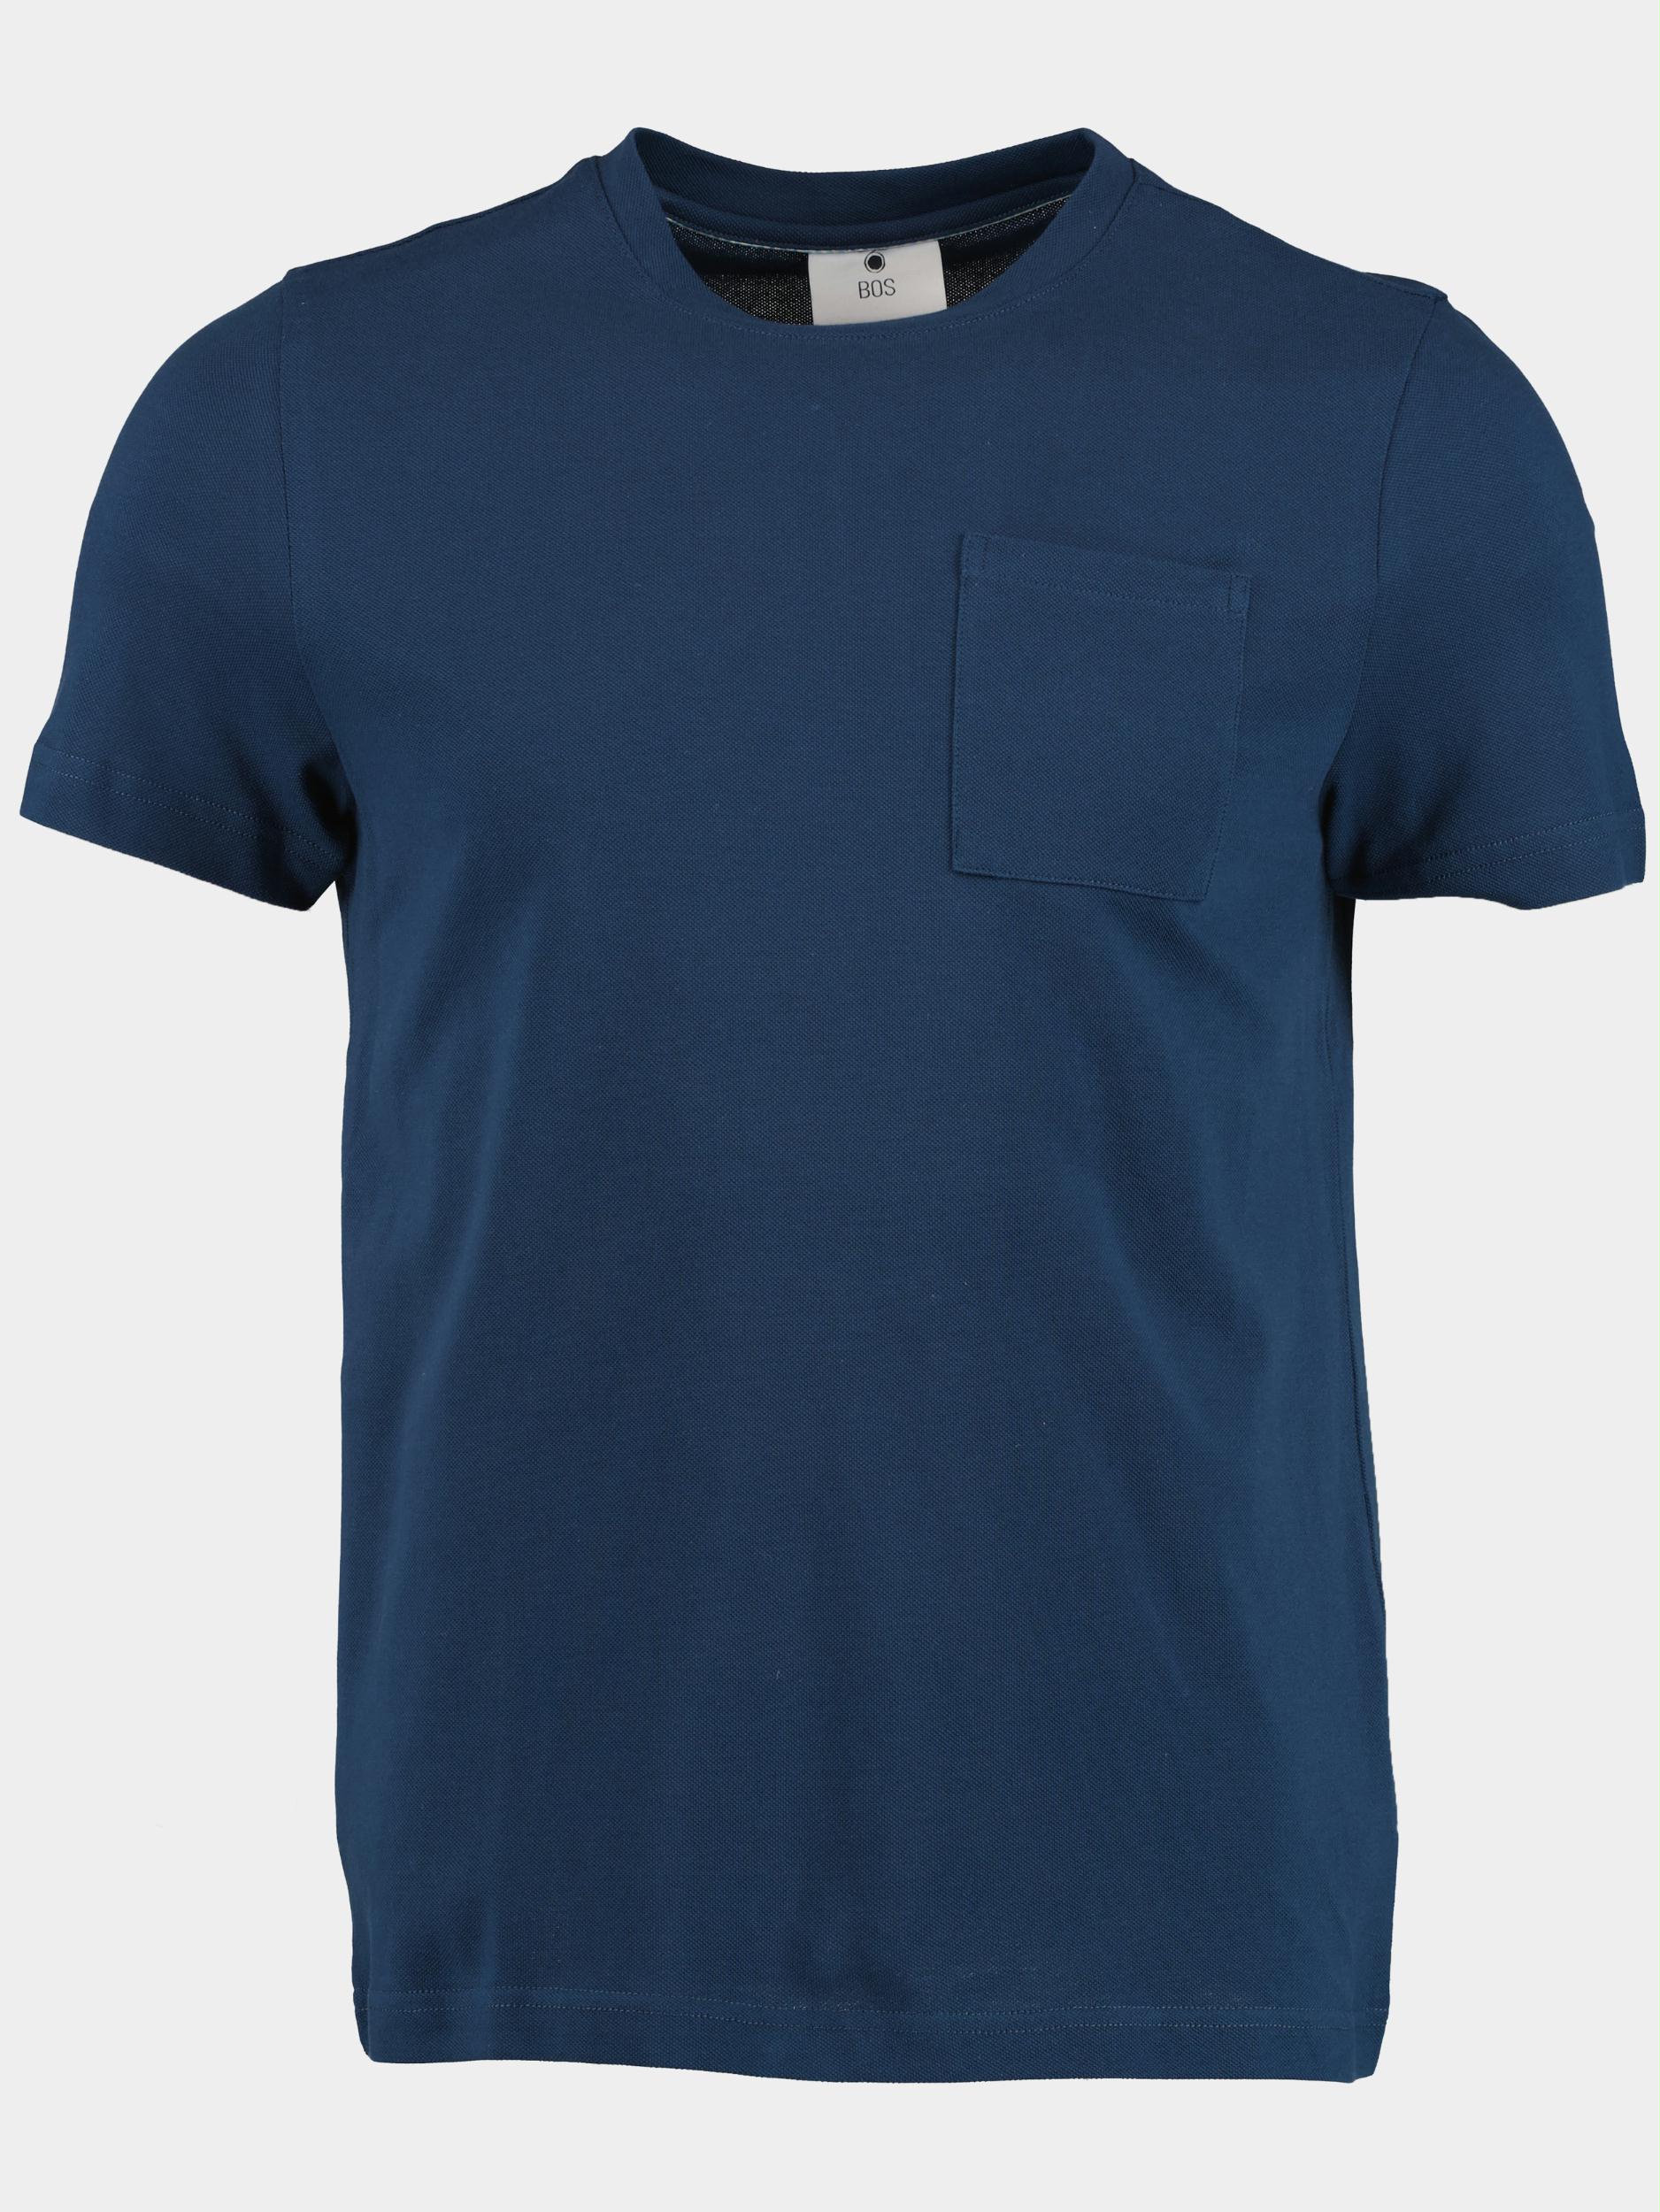 Bos Bright Blue T-shirt korte mouw Blauw Cooper T-shirt Pique 23108CO54BO/267 dark denim